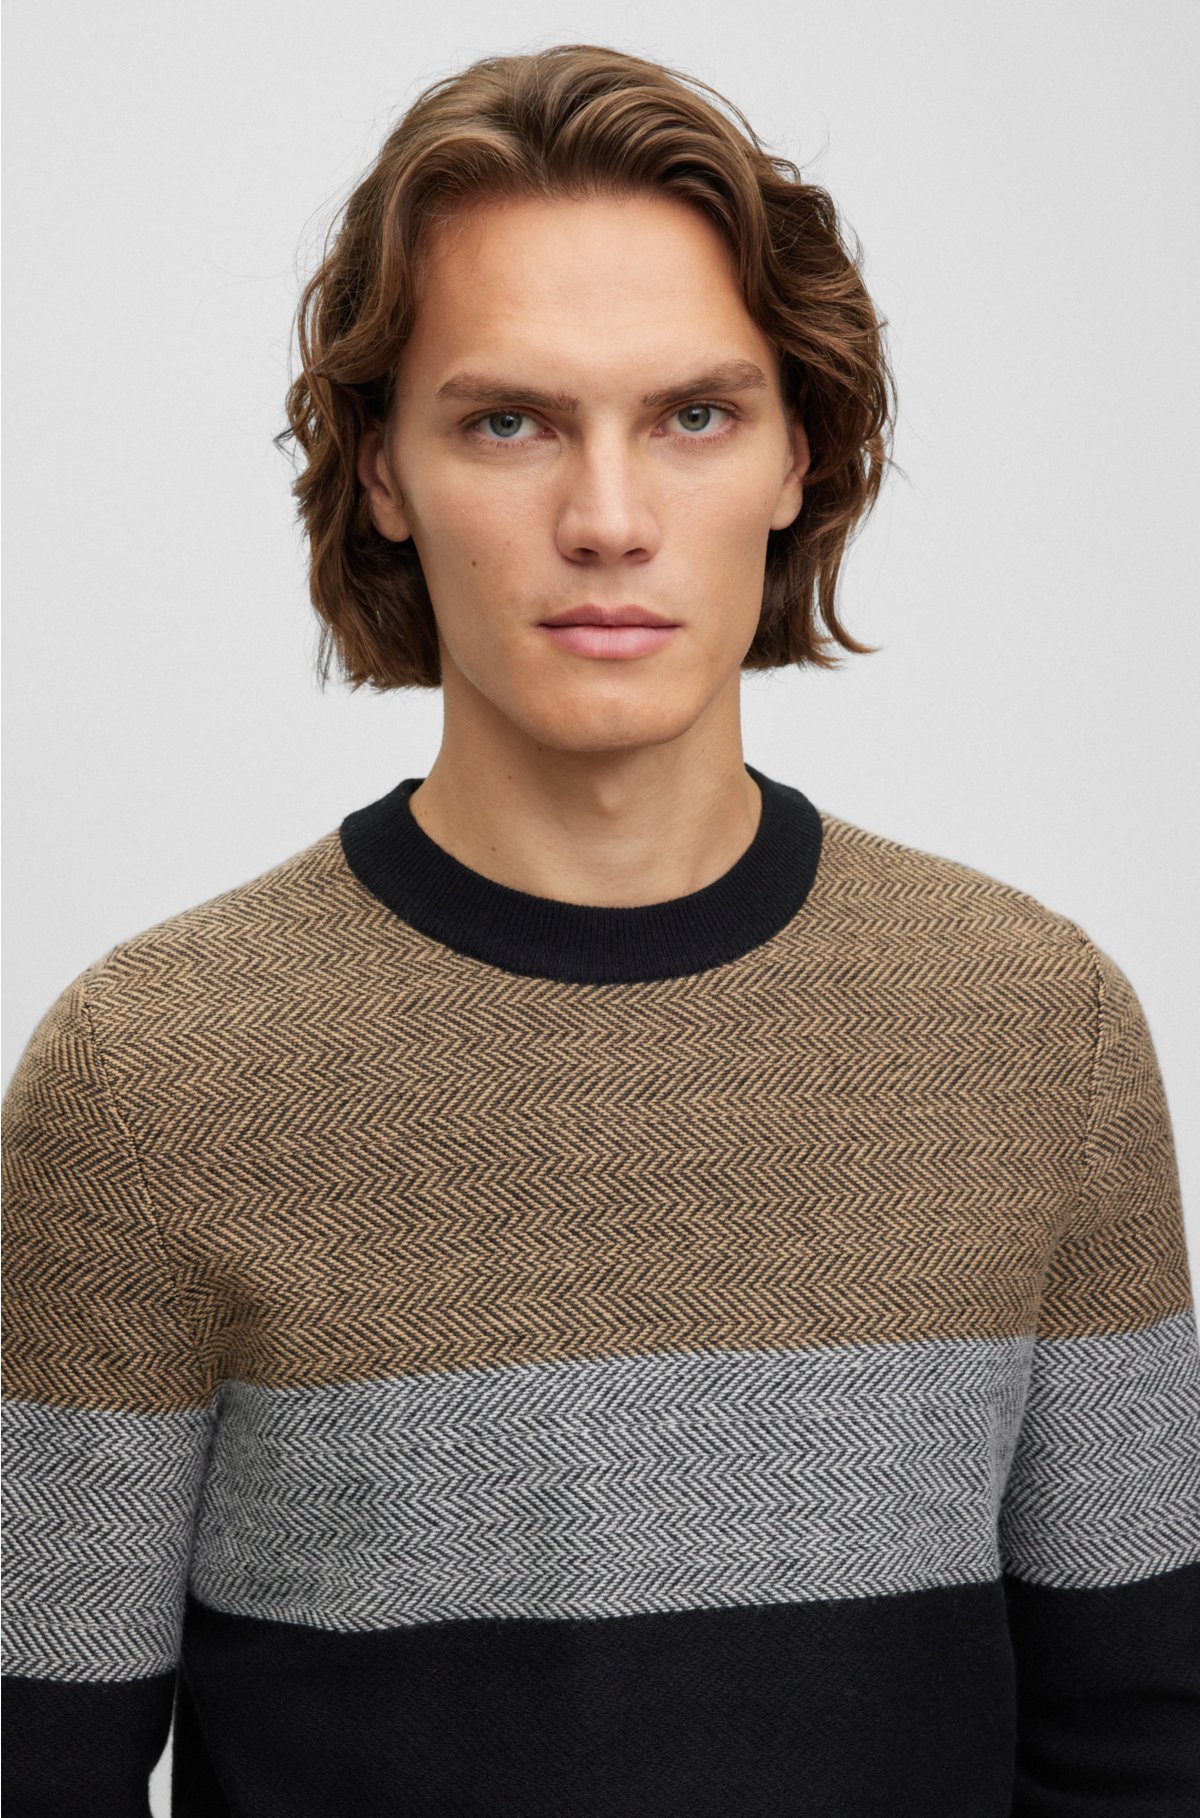 Herringbone-structured sweater in virgin wool and cotton, Black